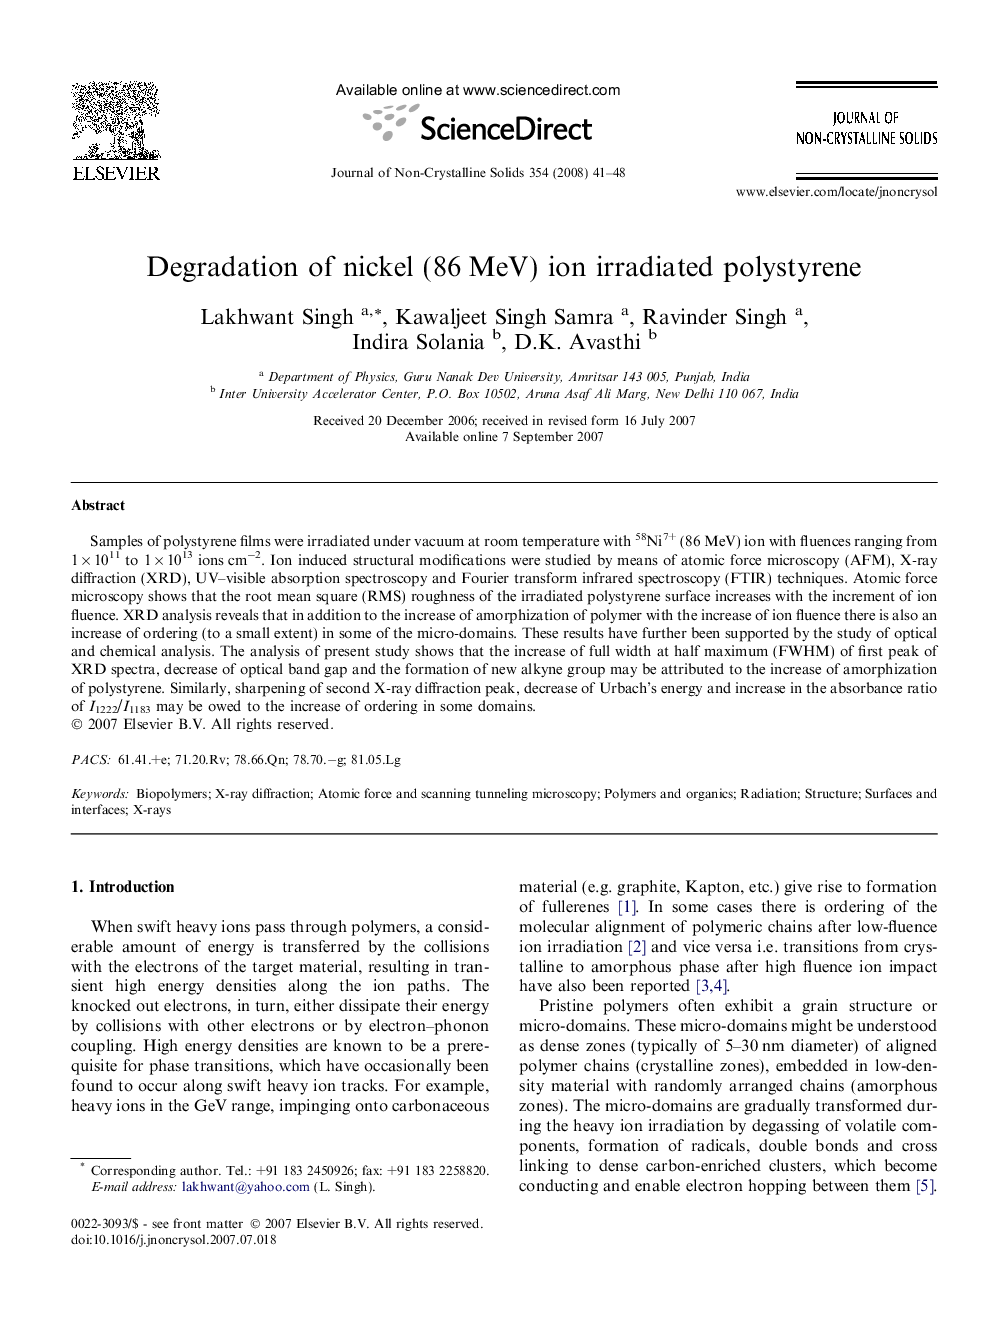 Degradation of nickel (86 MeV) ion irradiated polystyrene